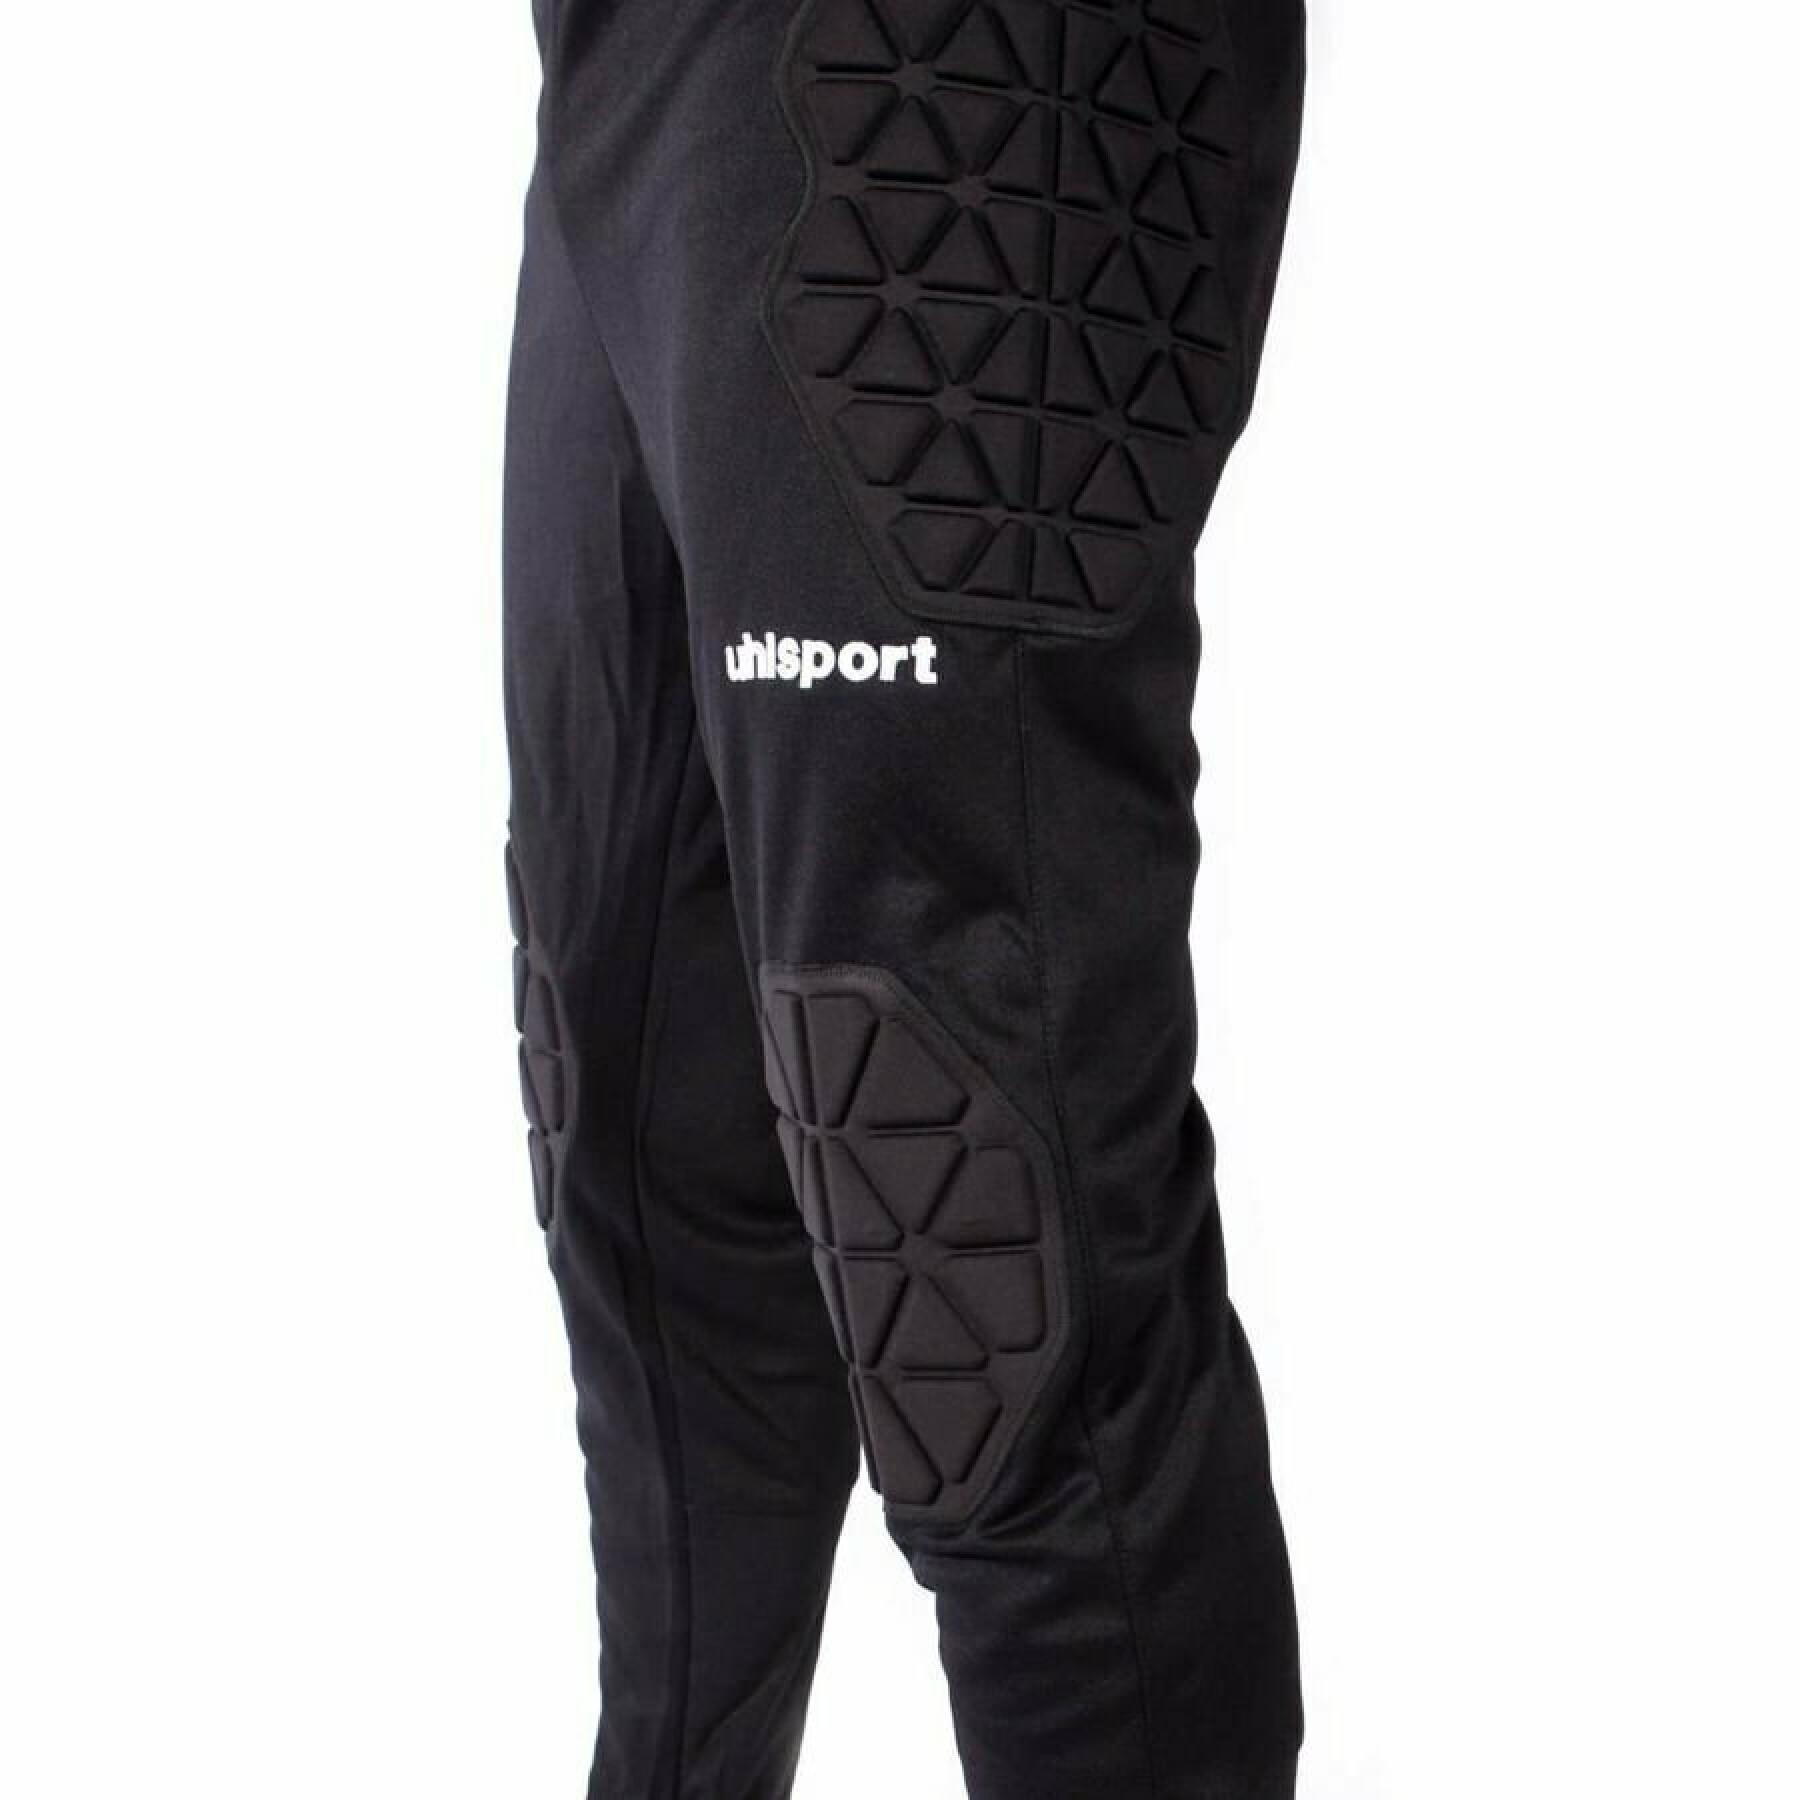 Goalkeeper pants essential Uhlsport